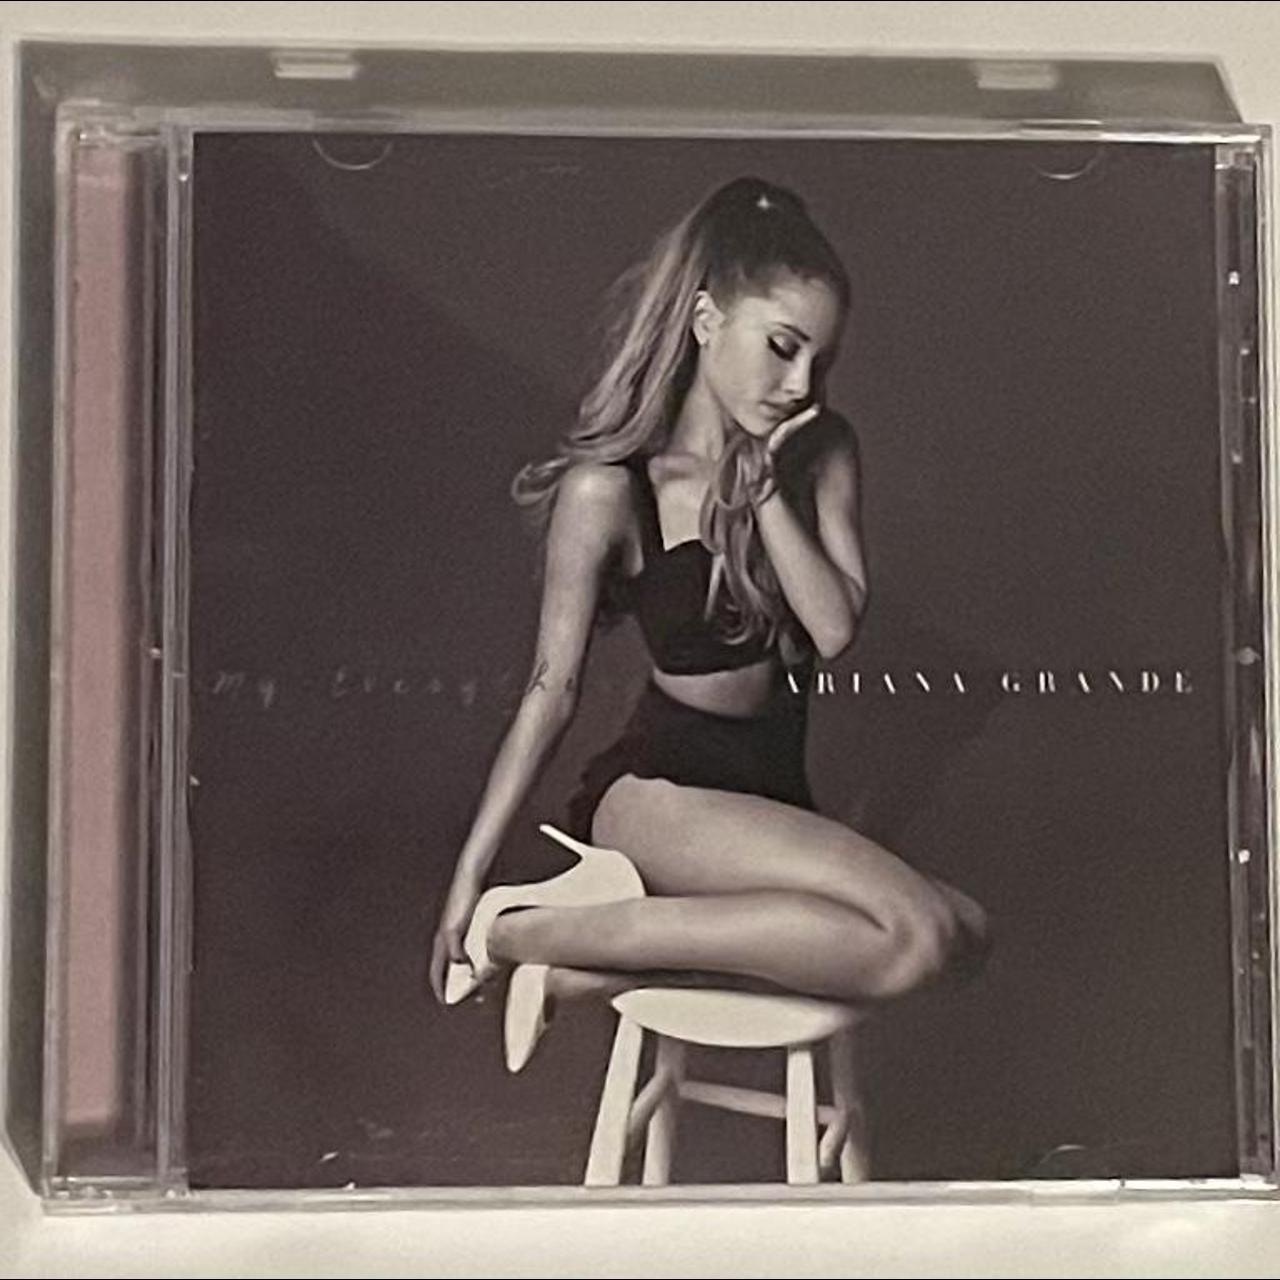 Ariana Grande - My Everything - CD 